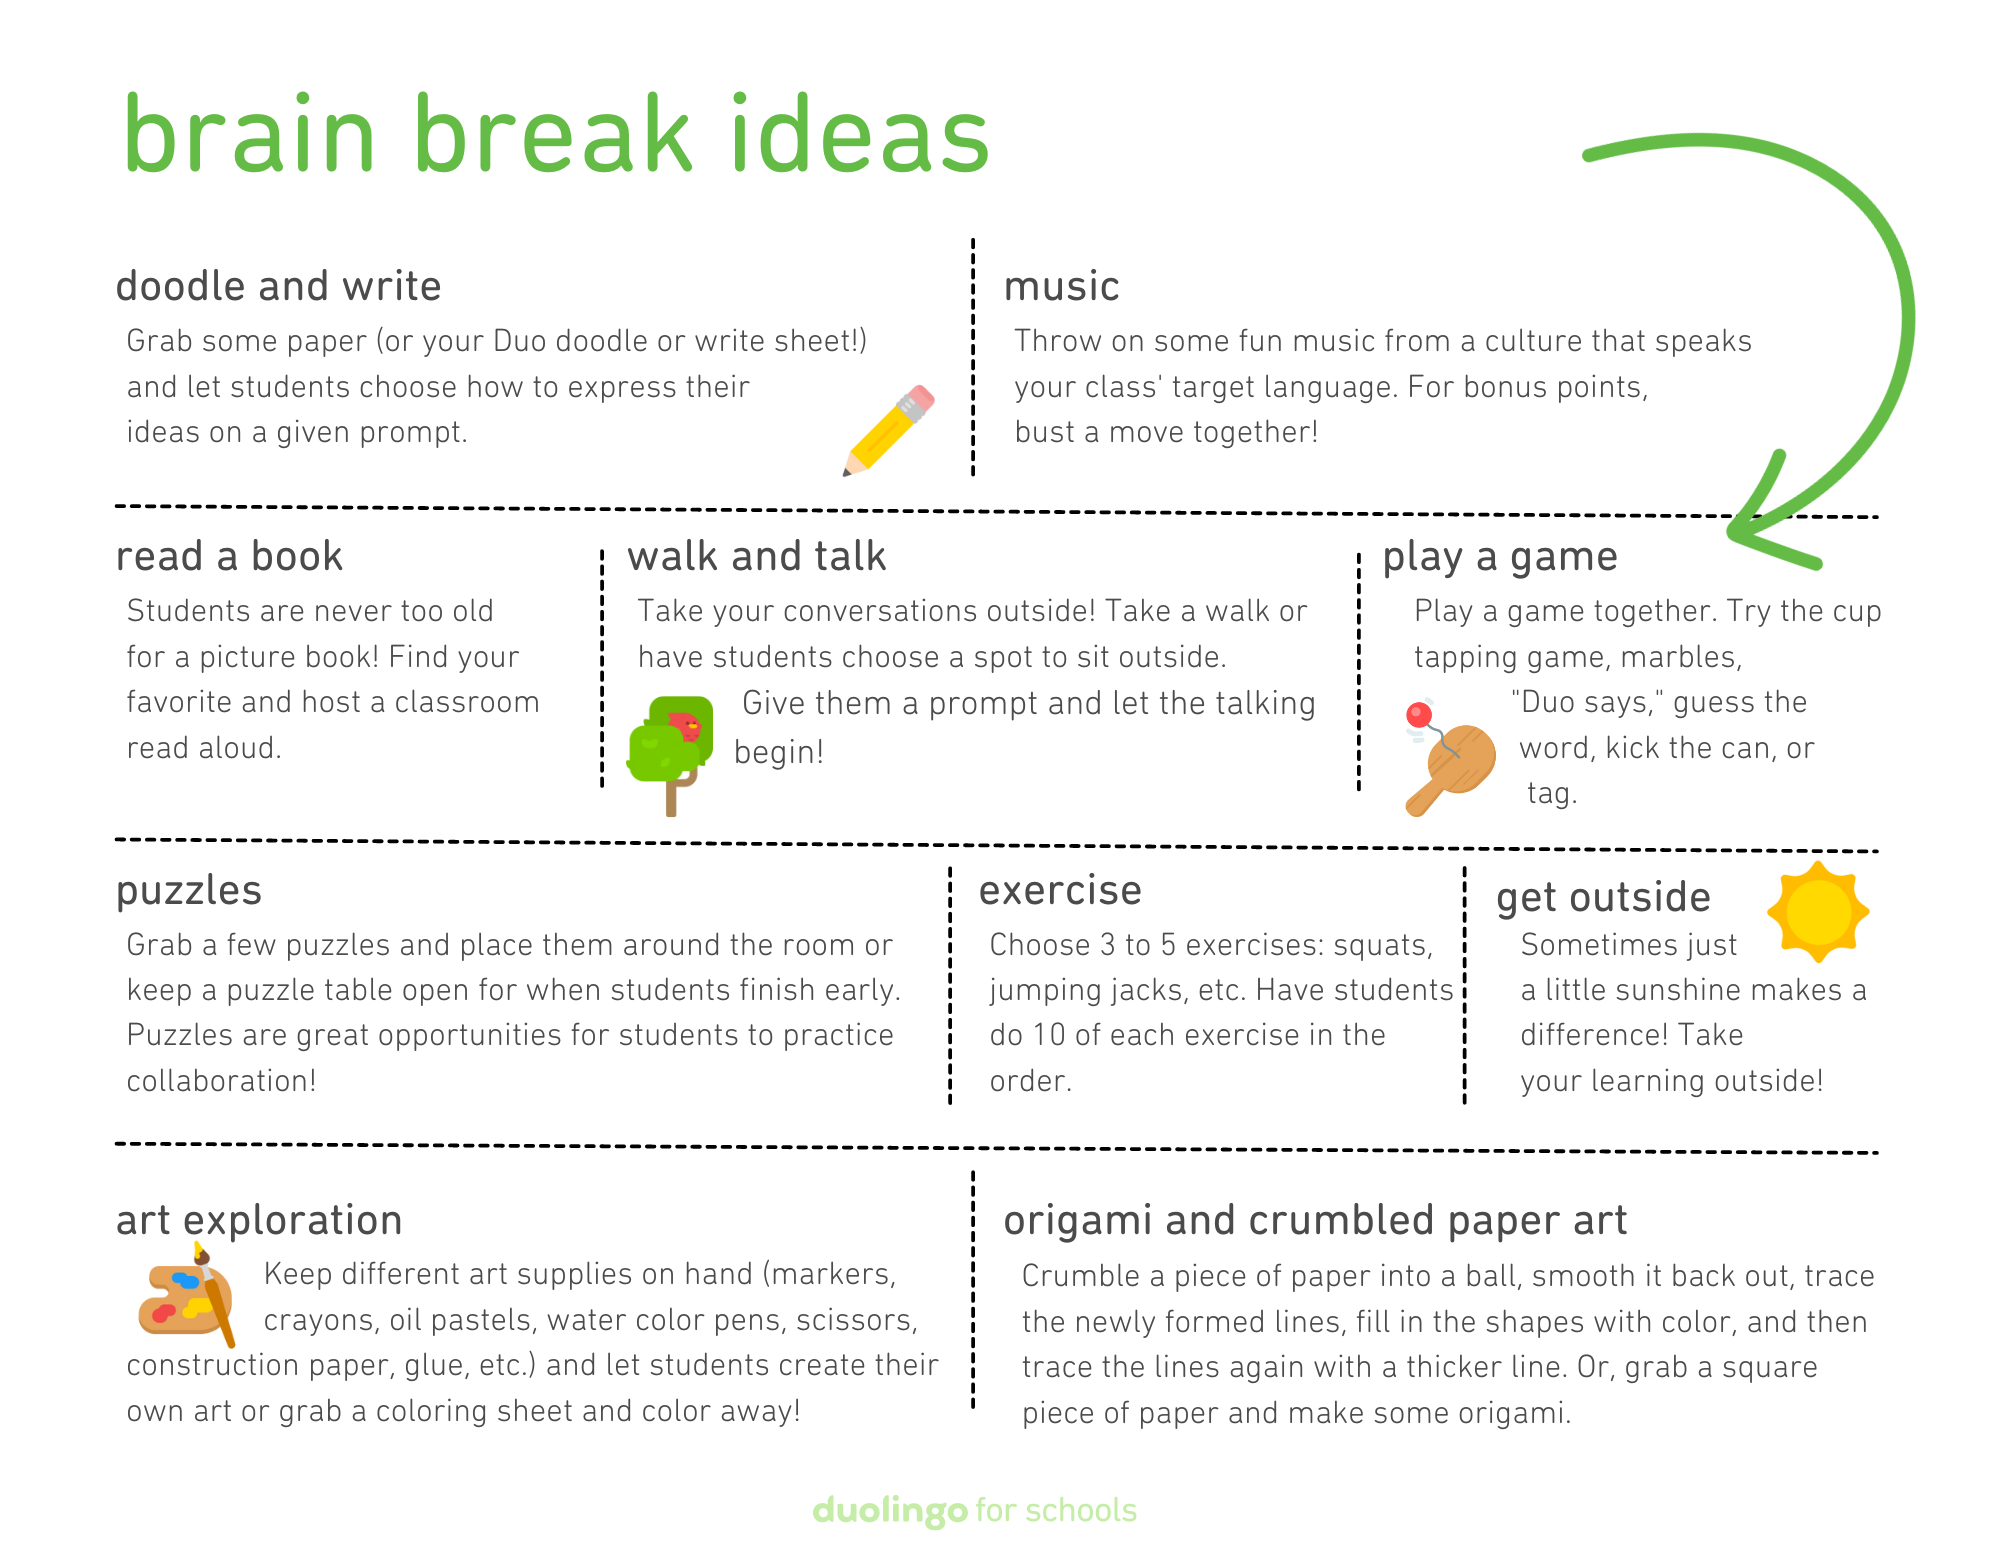 brain-break-ideas-duolingo-for-schools